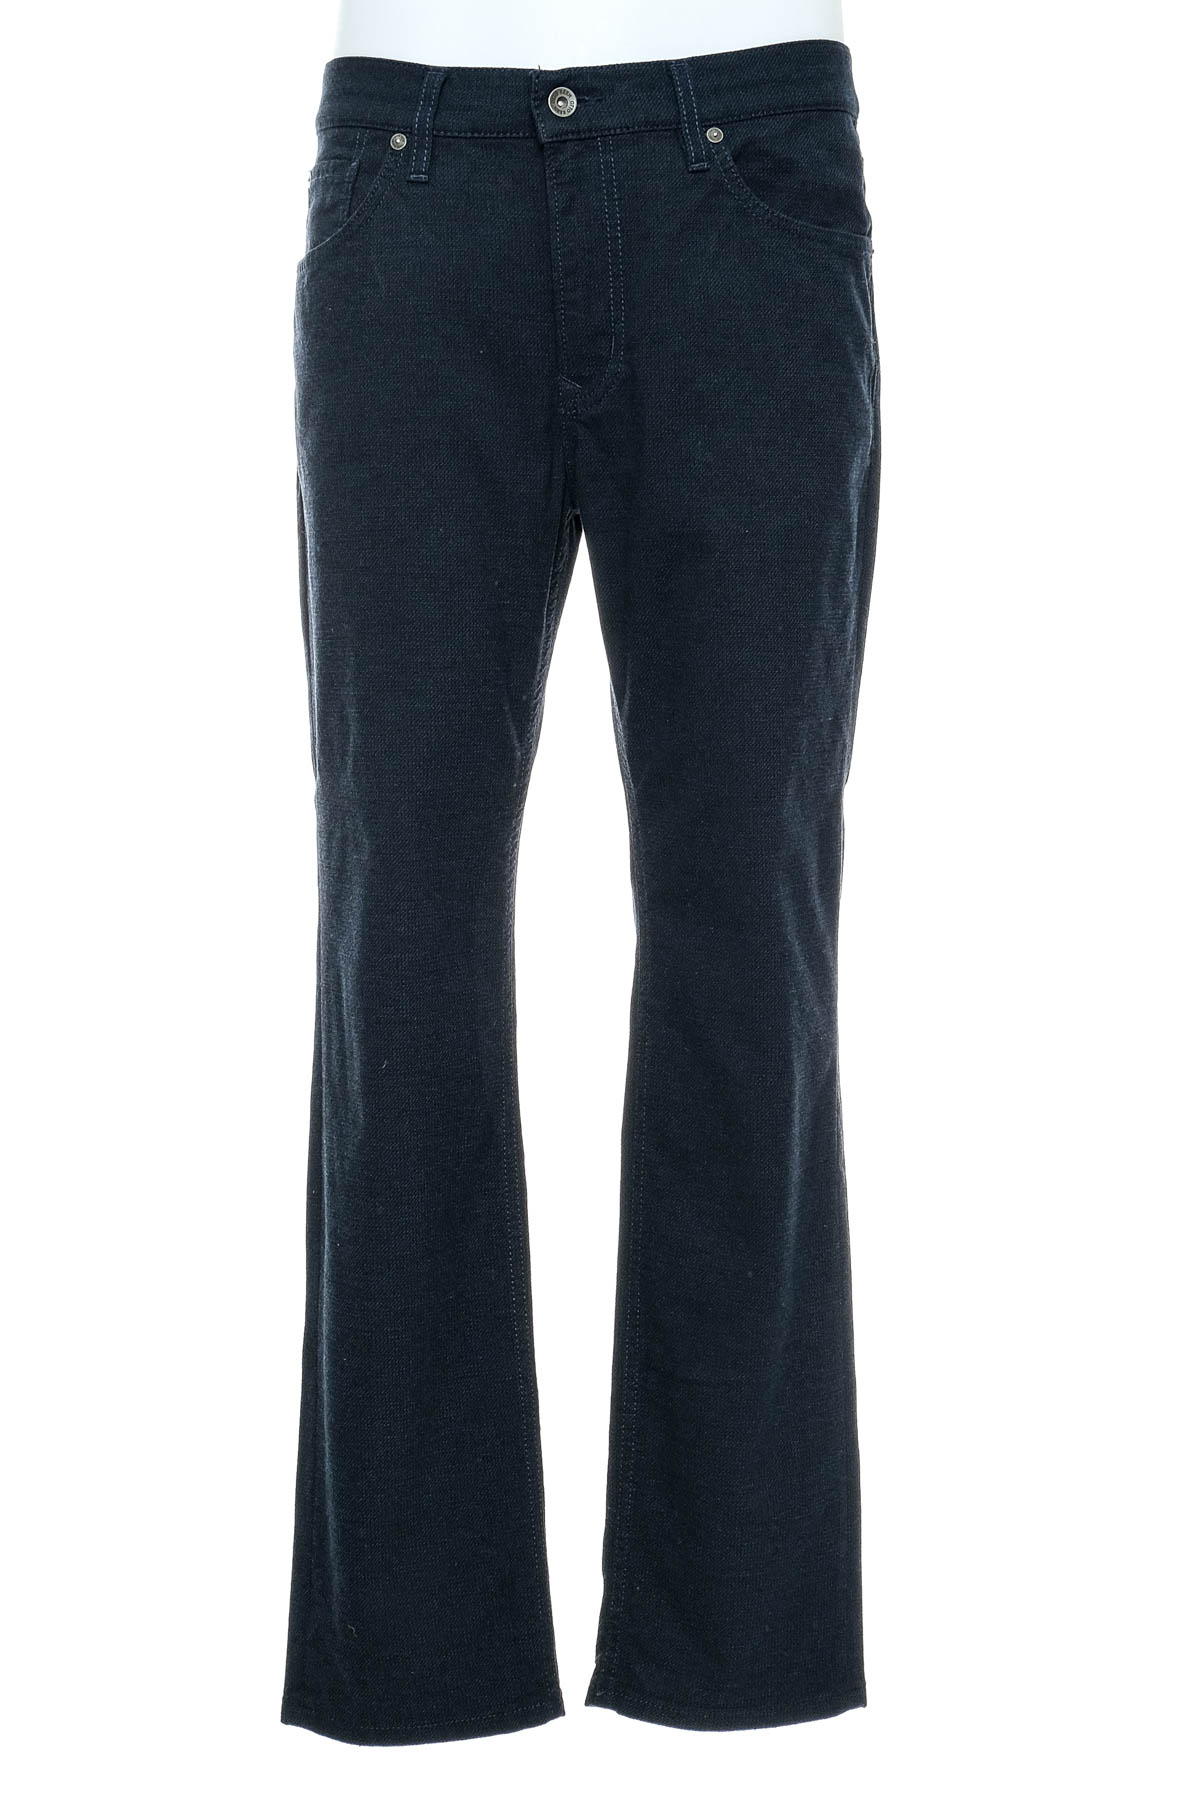 Pantalon pentru bărbați - Otto Kern - 0